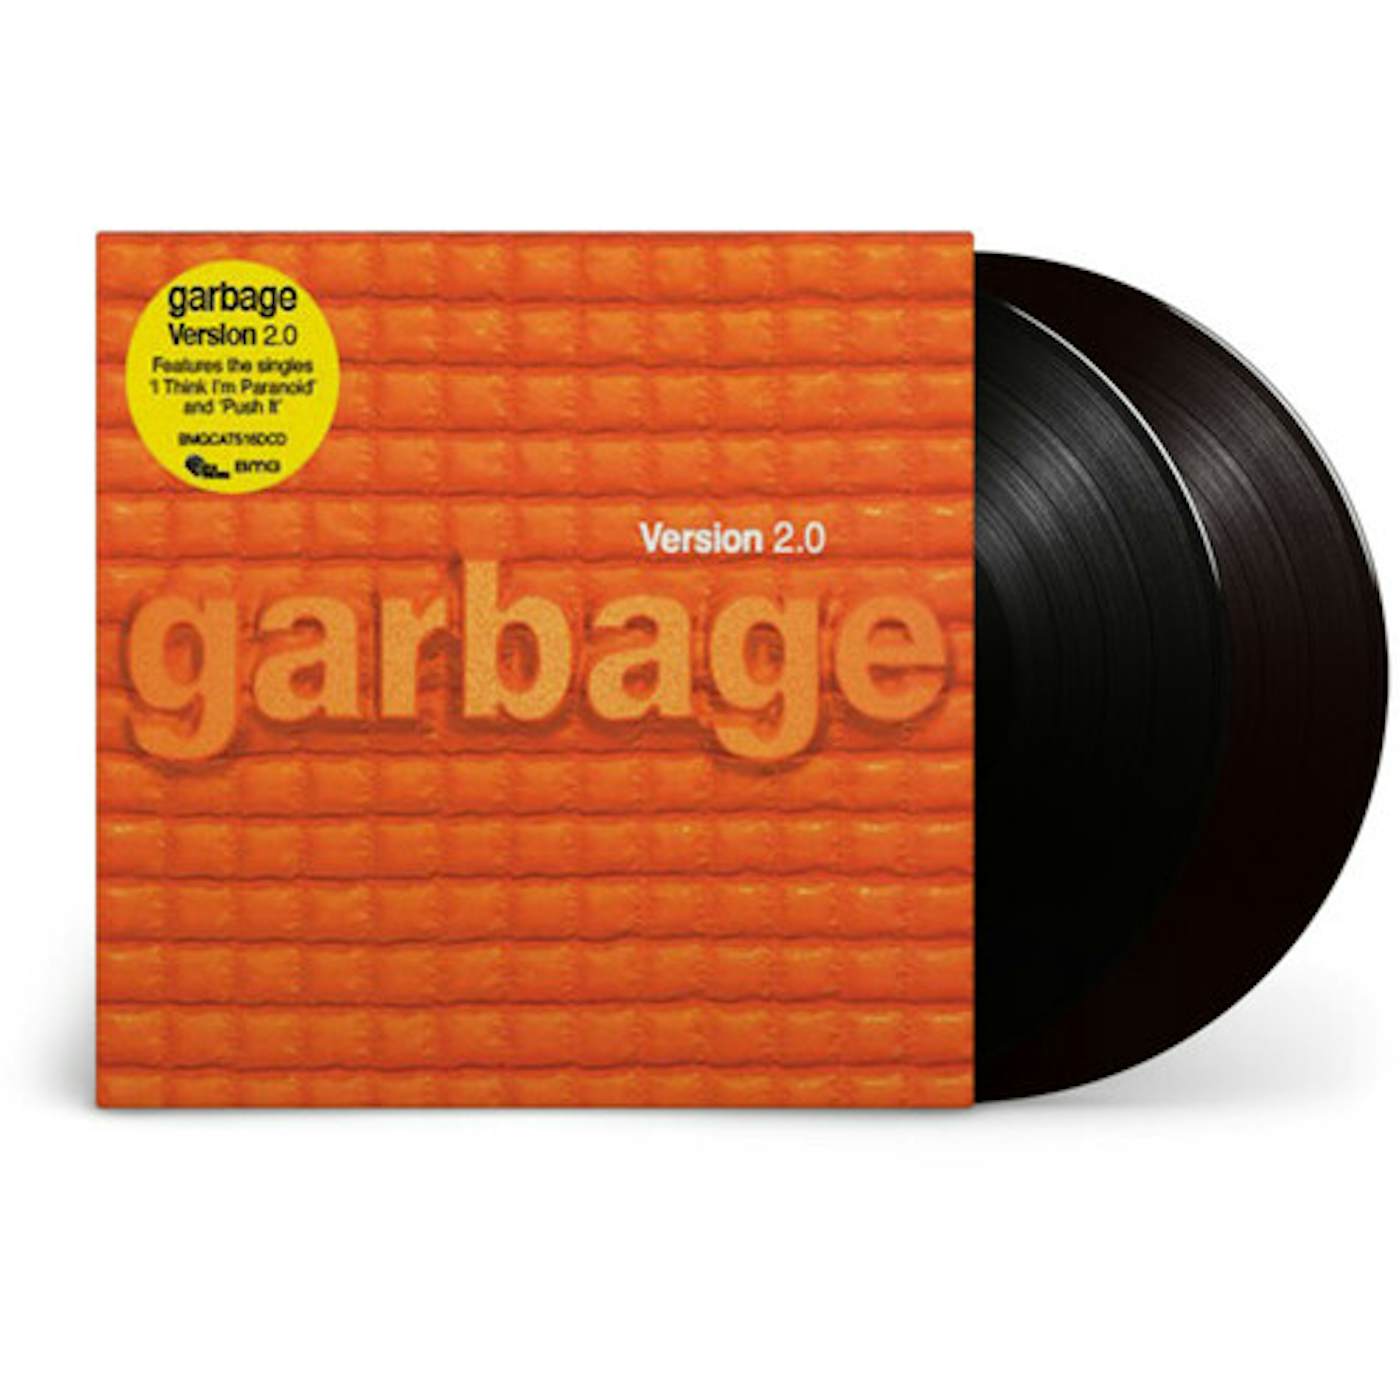 Garbage Version 2.0 Vinyl Record